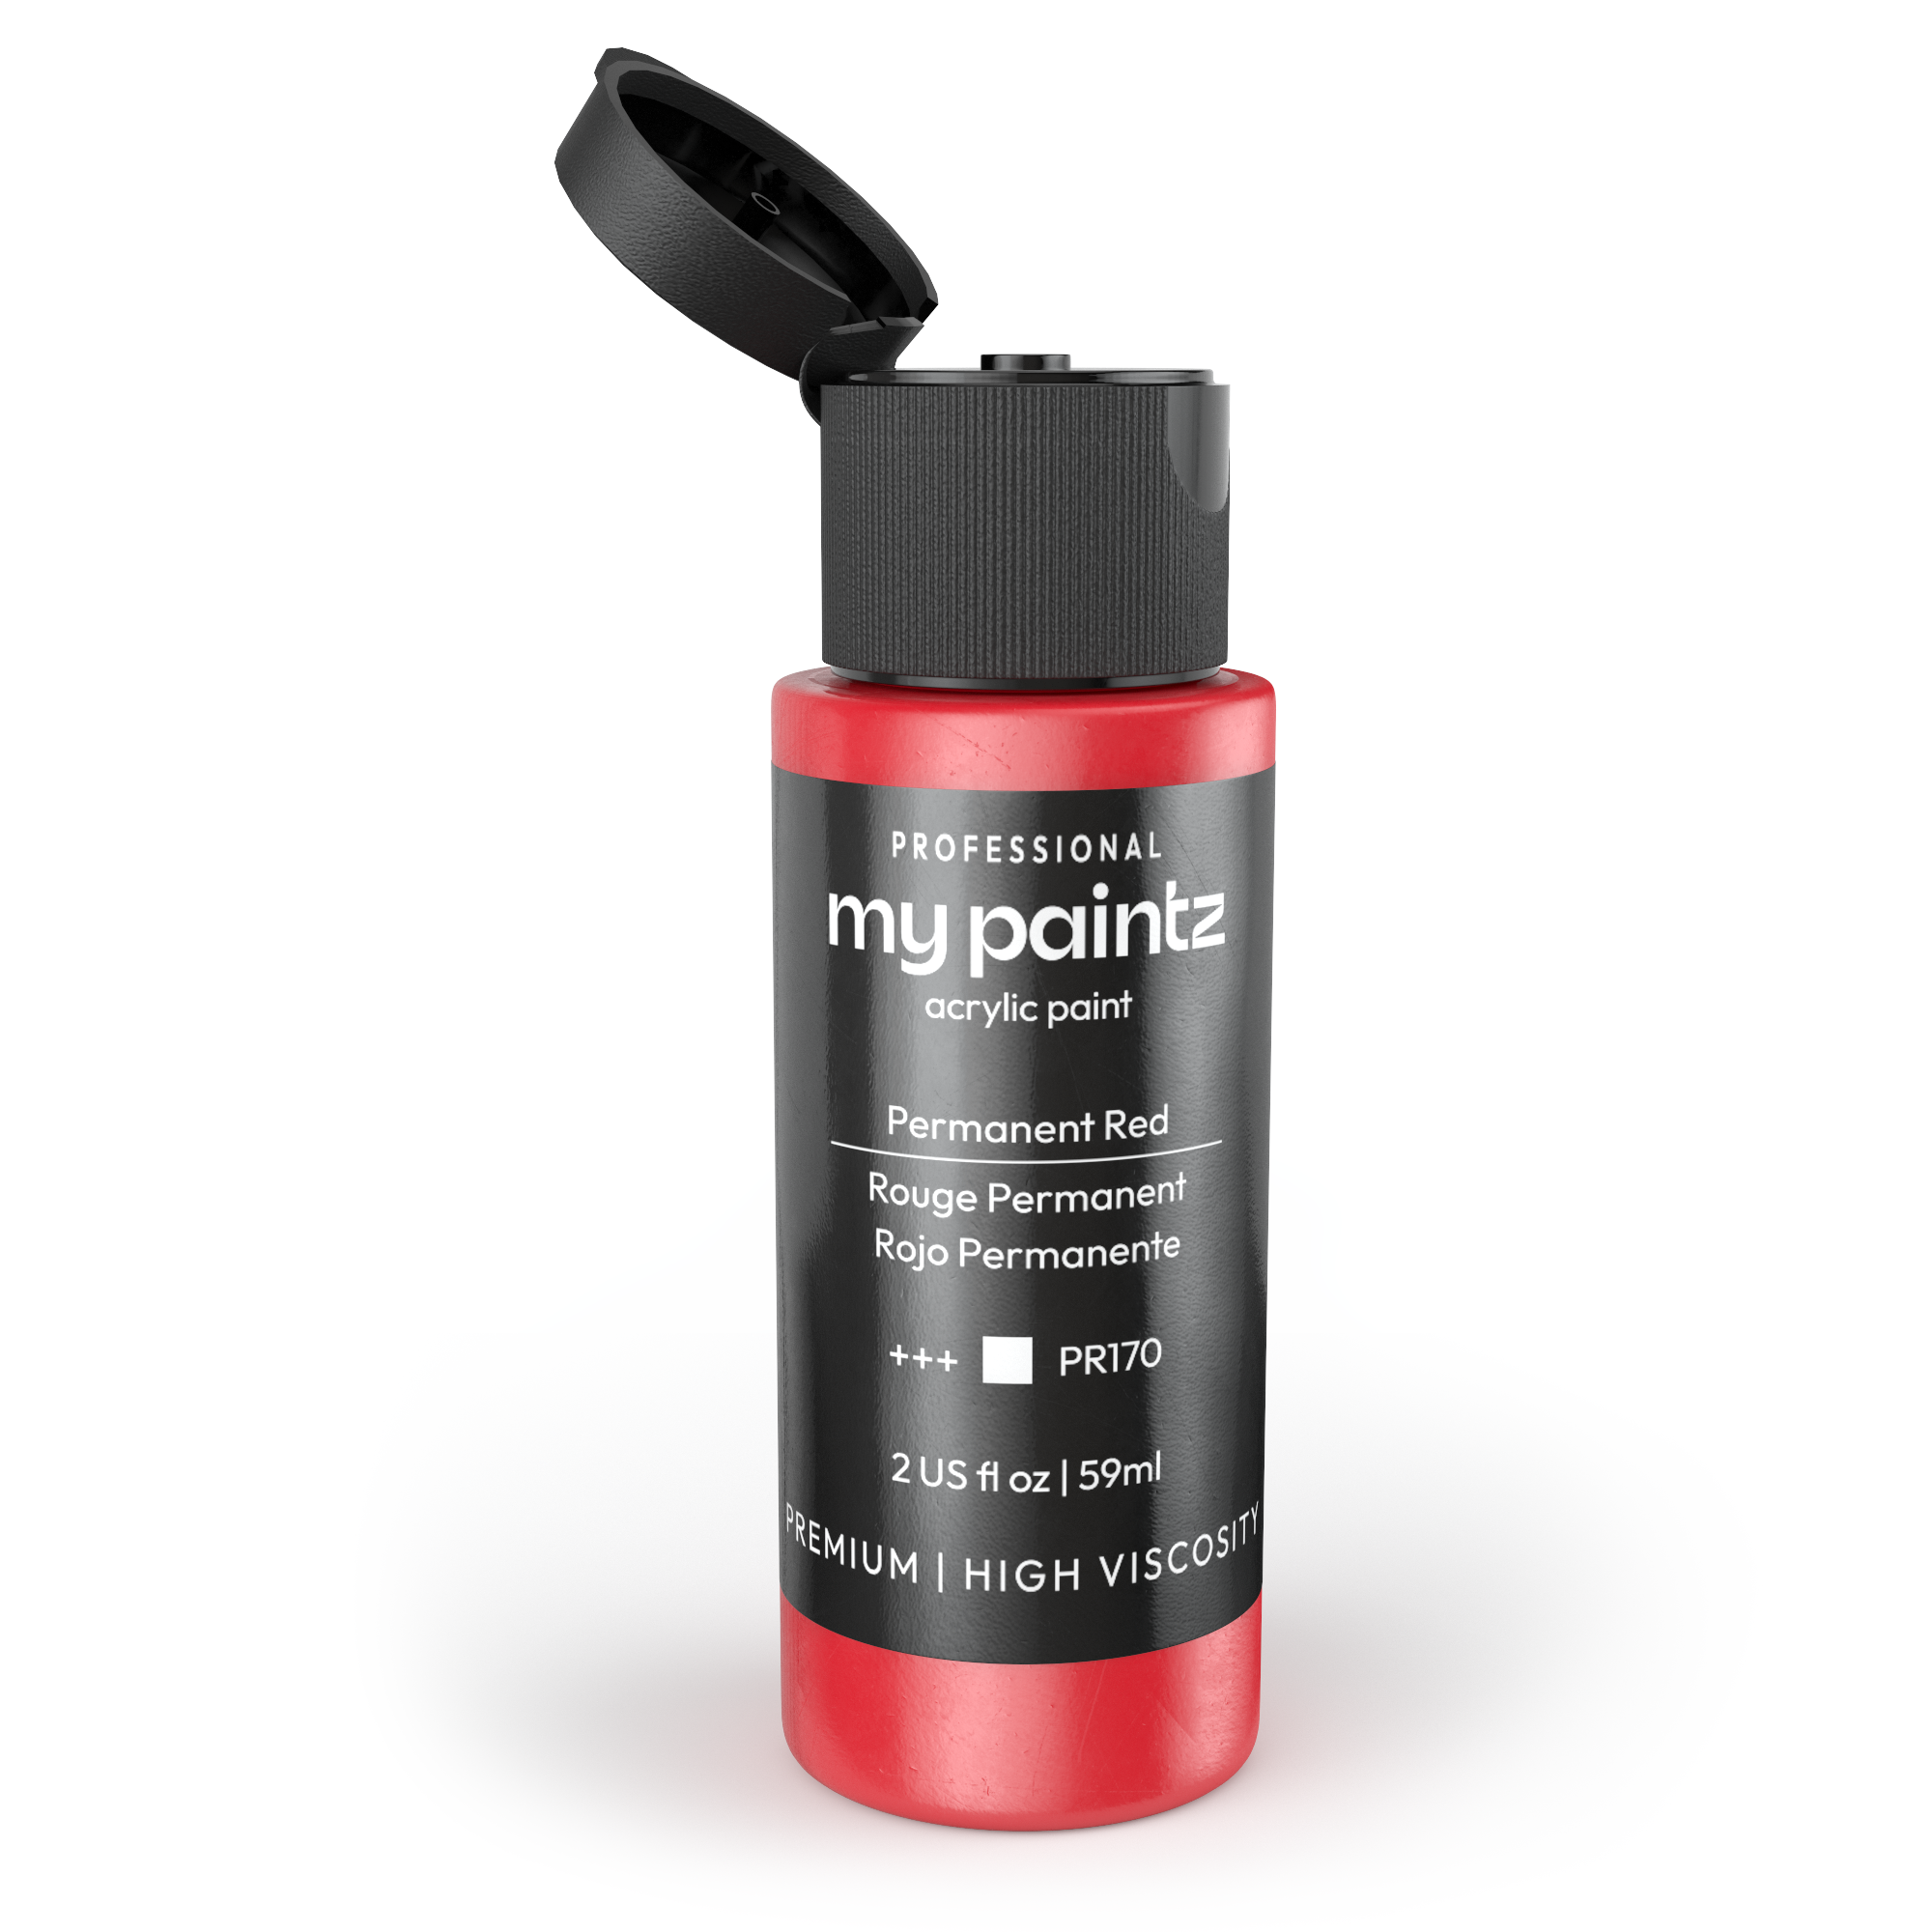 mypaintz Professional Thick Acrylic Paint Set 24 colors (2 extra white – my  paintz